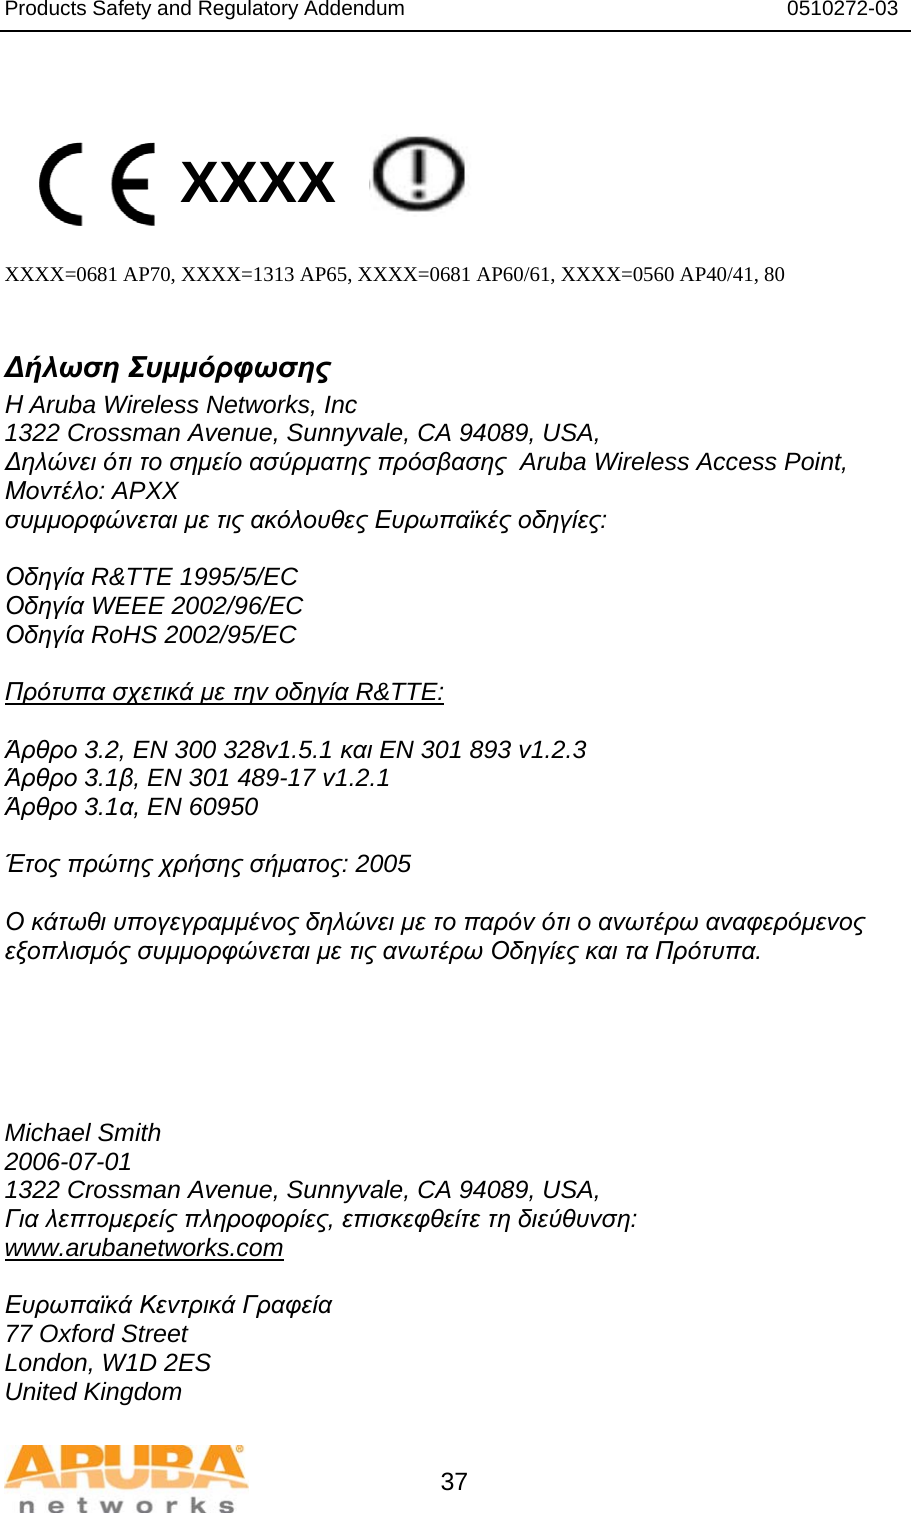 Products Safety and Regulatory Addendum                                                                  0510272-03   37   XXXX    XXXX=0681 AP70, XXXX=1313 AP65, XXXX=0681 AP60/61, XXXX=0560 AP40/41, 80  Δήλωση Συμμόρφωσης Η Aruba Wireless Networks, Inc 1322 Crossman Avenue, Sunnyvale, CA 94089, USA, Δηλώνει ότι το σημείο ασύρματης πρόσβασης  Aruba Wireless Access Point, Μοντέλο: APXX συμμορφώνεται με τις ακόλουθες Ευρωπαϊκές οδηγίες:  Οδηγία R&amp;TTE 1995/5/EC Οδηγία WEEE 2002/96/EC Οδηγία RoHS 2002/95/EC  Πρότυπα σχετικά με την οδηγία R&amp;TTE:  Άρθρο 3.2, EN 300 328v1.5.1 και EN 301 893 v1.2.3 Άρθρο 3.1β, EN 301 489-17 v1.2.1 Άρθρο 3.1α, EN 60950  Έτος πρώτης χρήσης σήματος: 2005  Ο κάτωθι υπογεγραμμένος δηλώνει με το παρόν ότι ο ανωτέρω αναφερόμενος εξοπλισμός συμμορφώνεται με τις ανωτέρω Οδηγίες και τα Πρότυπα.      Michael Smith 2006-07-01 1322 Crossman Avenue, Sunnyvale, CA 94089, USA, Για λεπτομερείς πληροφορίες, επισκεφθείτε τη διεύθυνση: www.arubanetworks.com  Ευρωπαϊκά Κεντρικά Γραφεία 77 Oxford Street London, W1D 2ES United Kingdom 